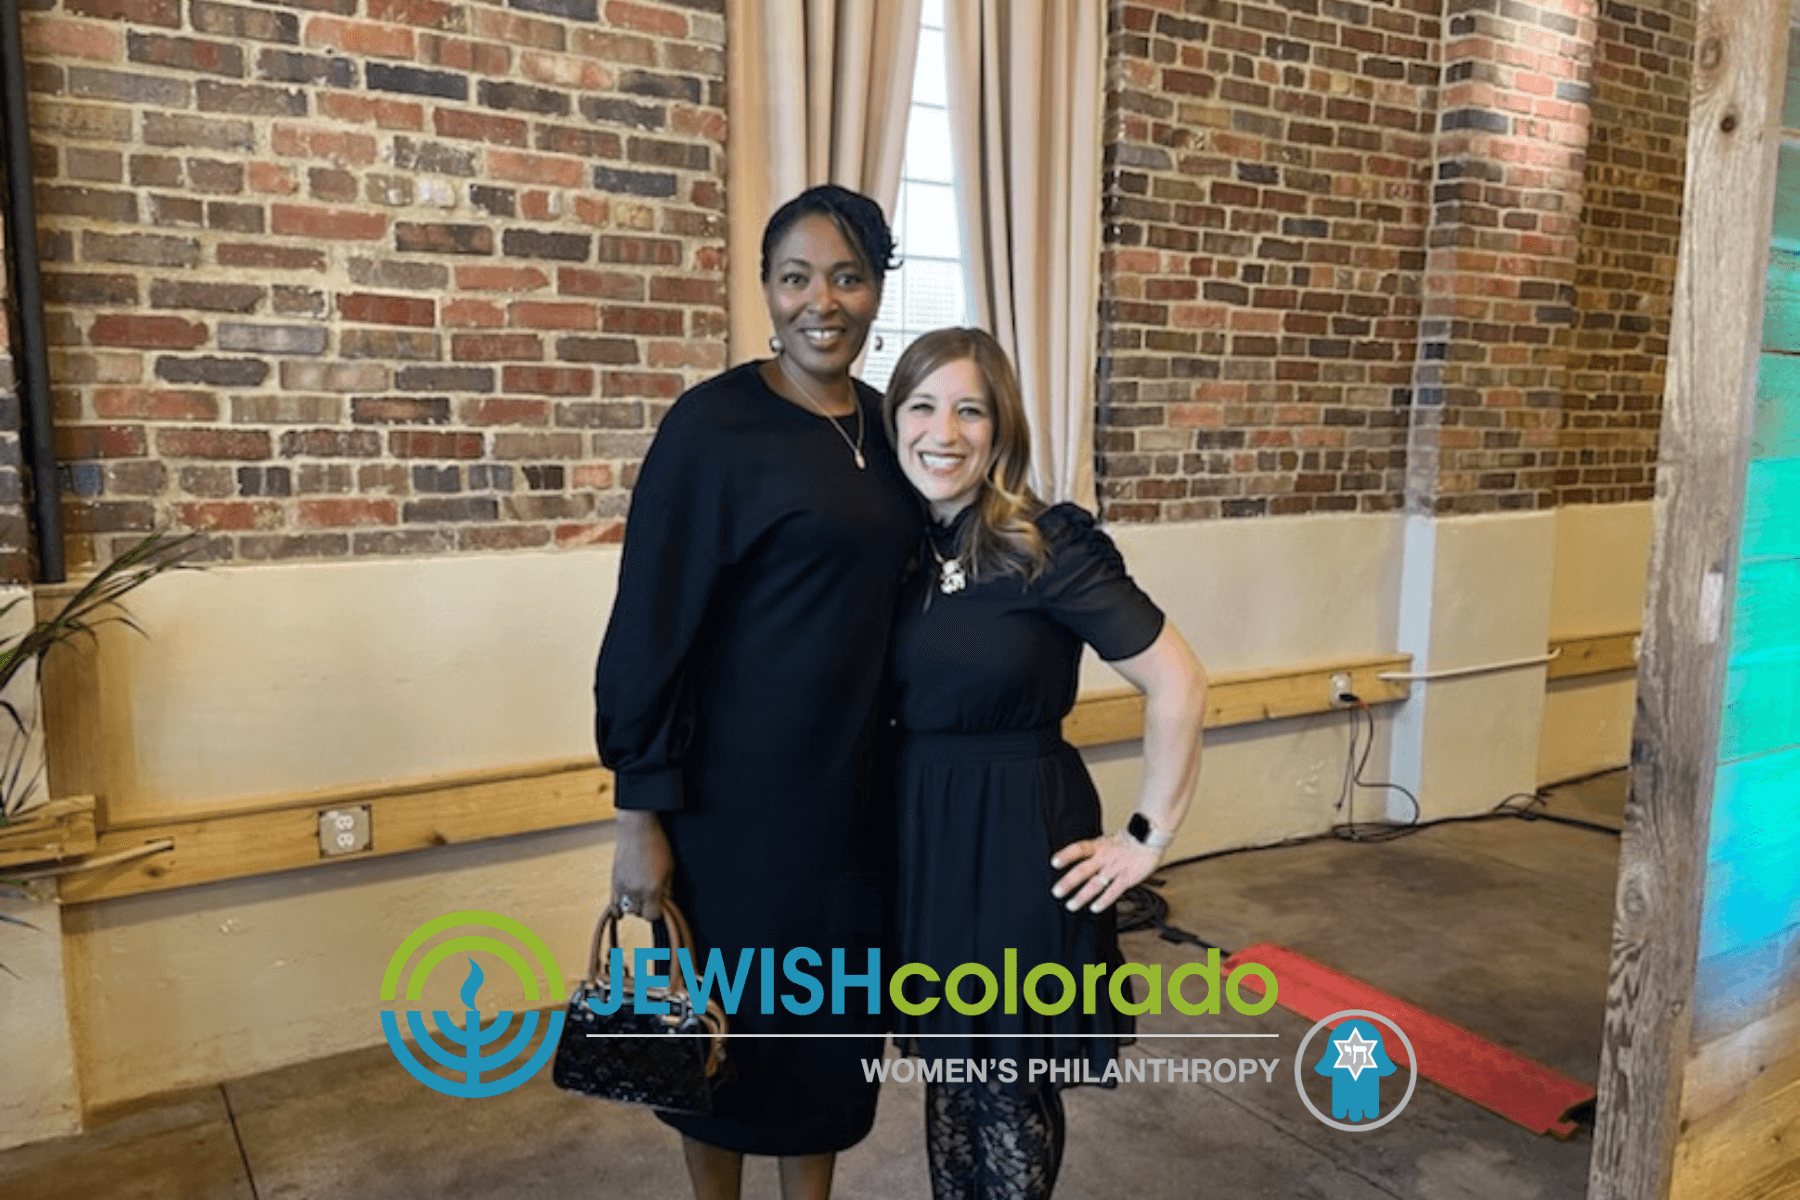 Carla Kutnick and Stacey Aviva Flint for JEWISHcolorado Women's Philanthropy Smart Women, Smart Conversation Series